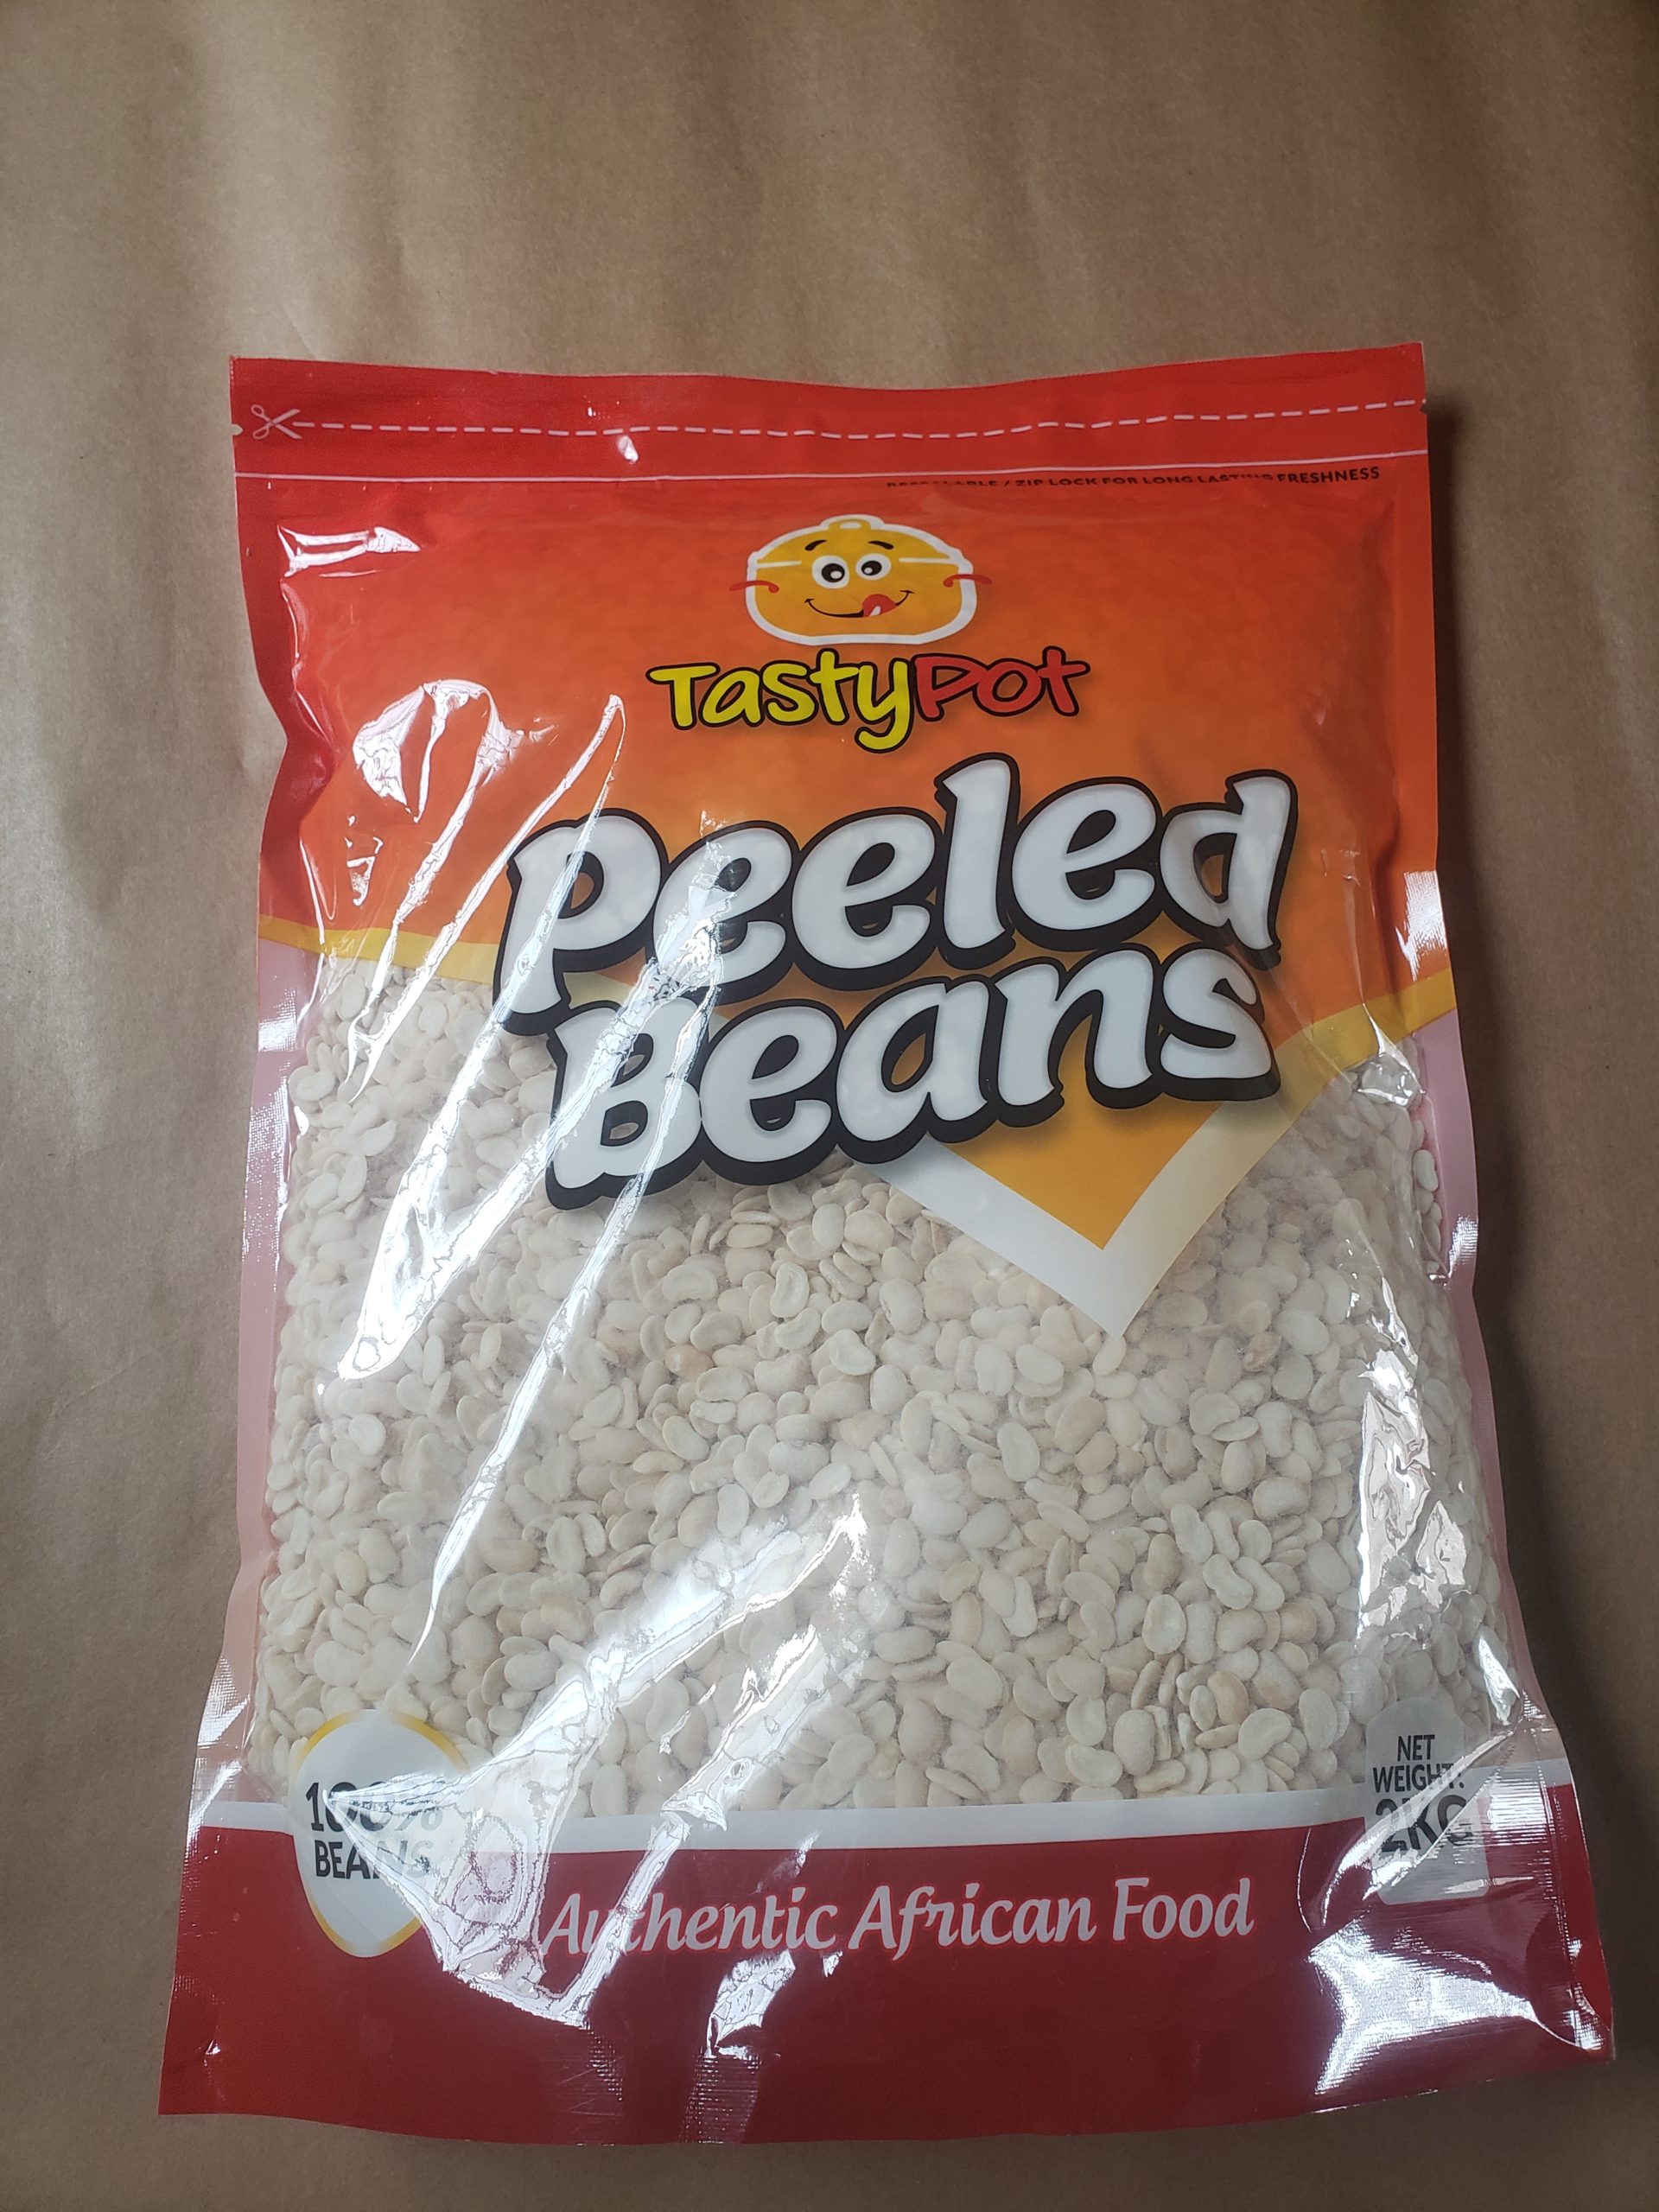 Peeled beans